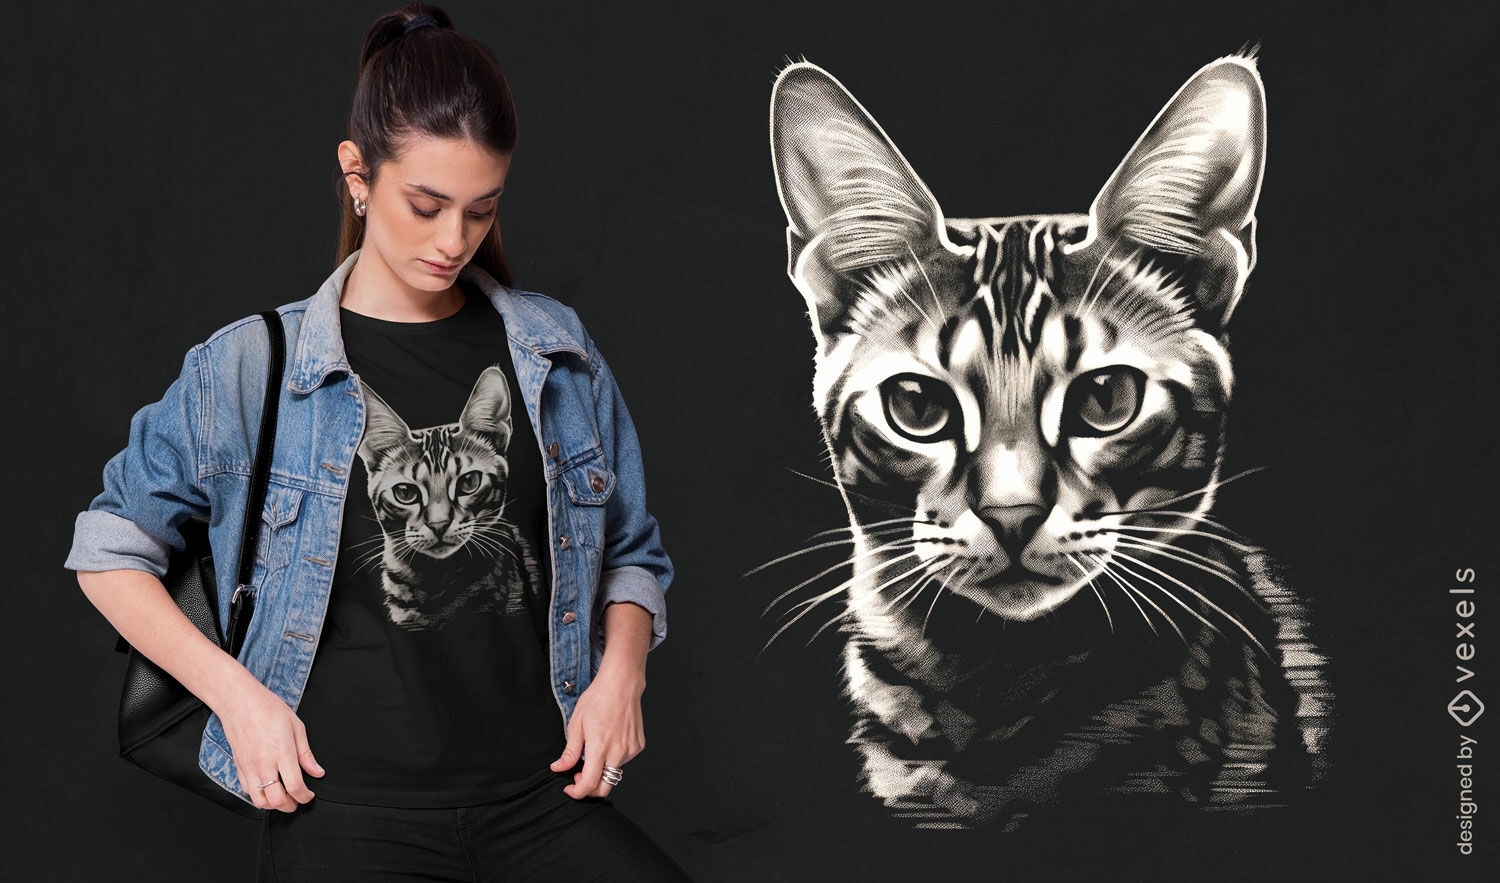 Detailed cat face t-shirt design